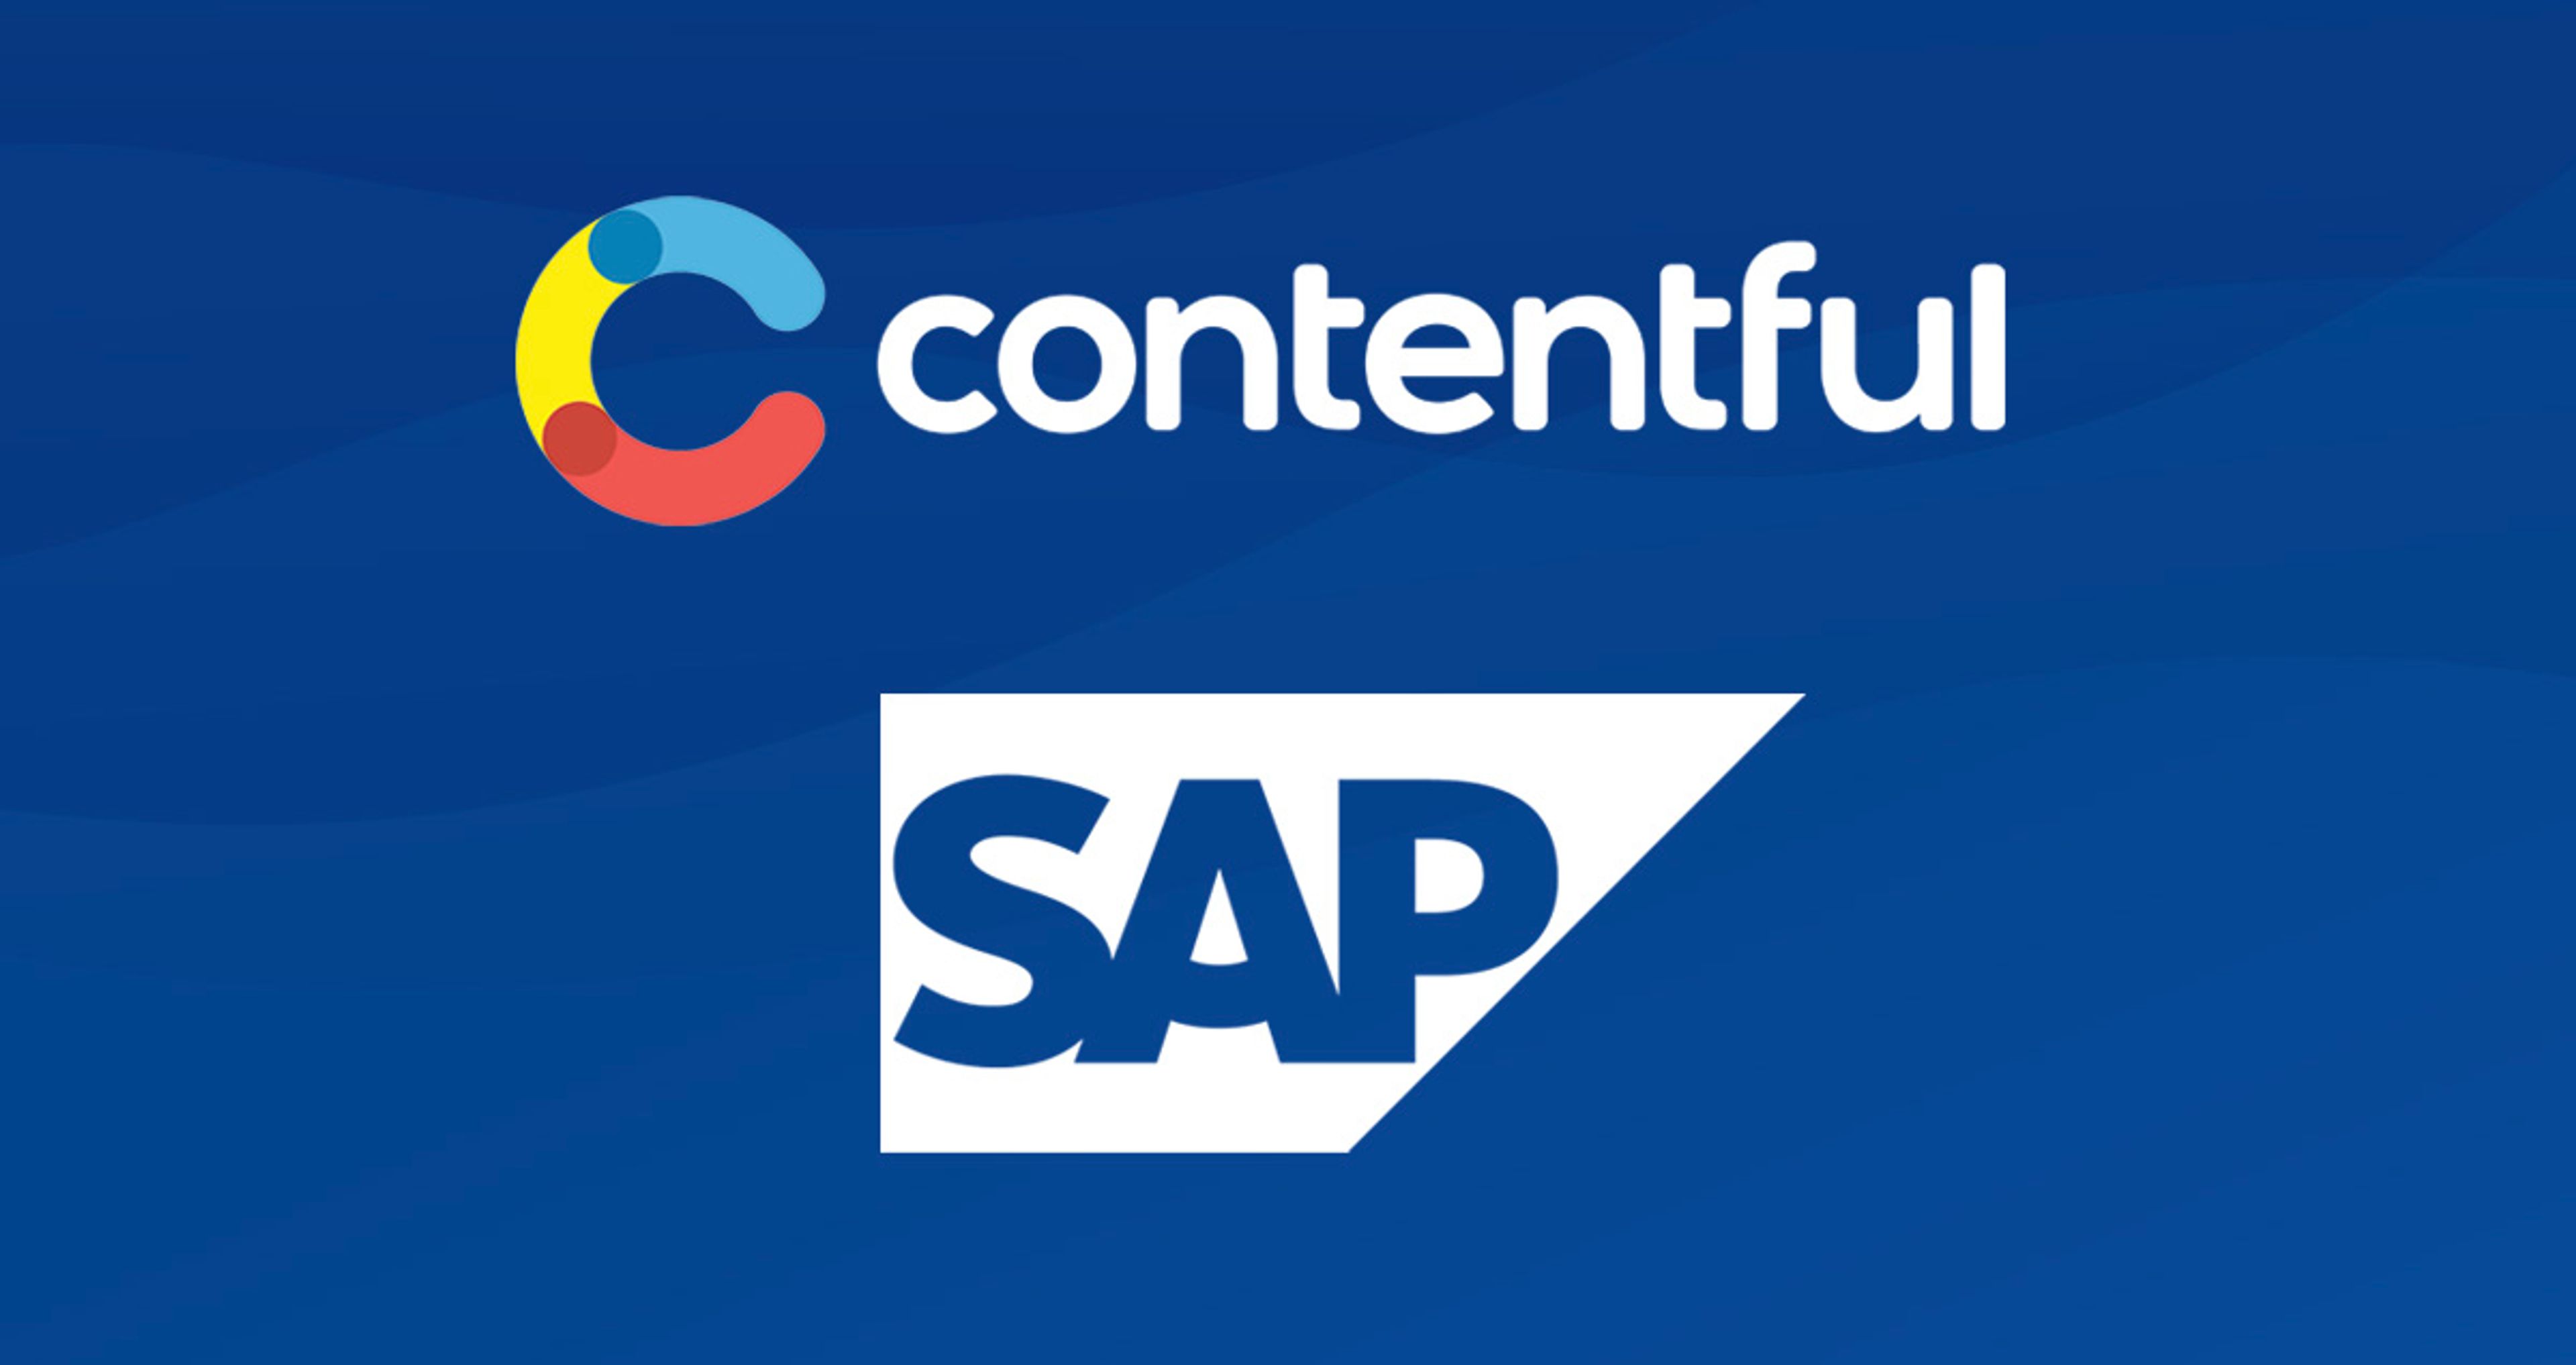 Contentful and SAP logos